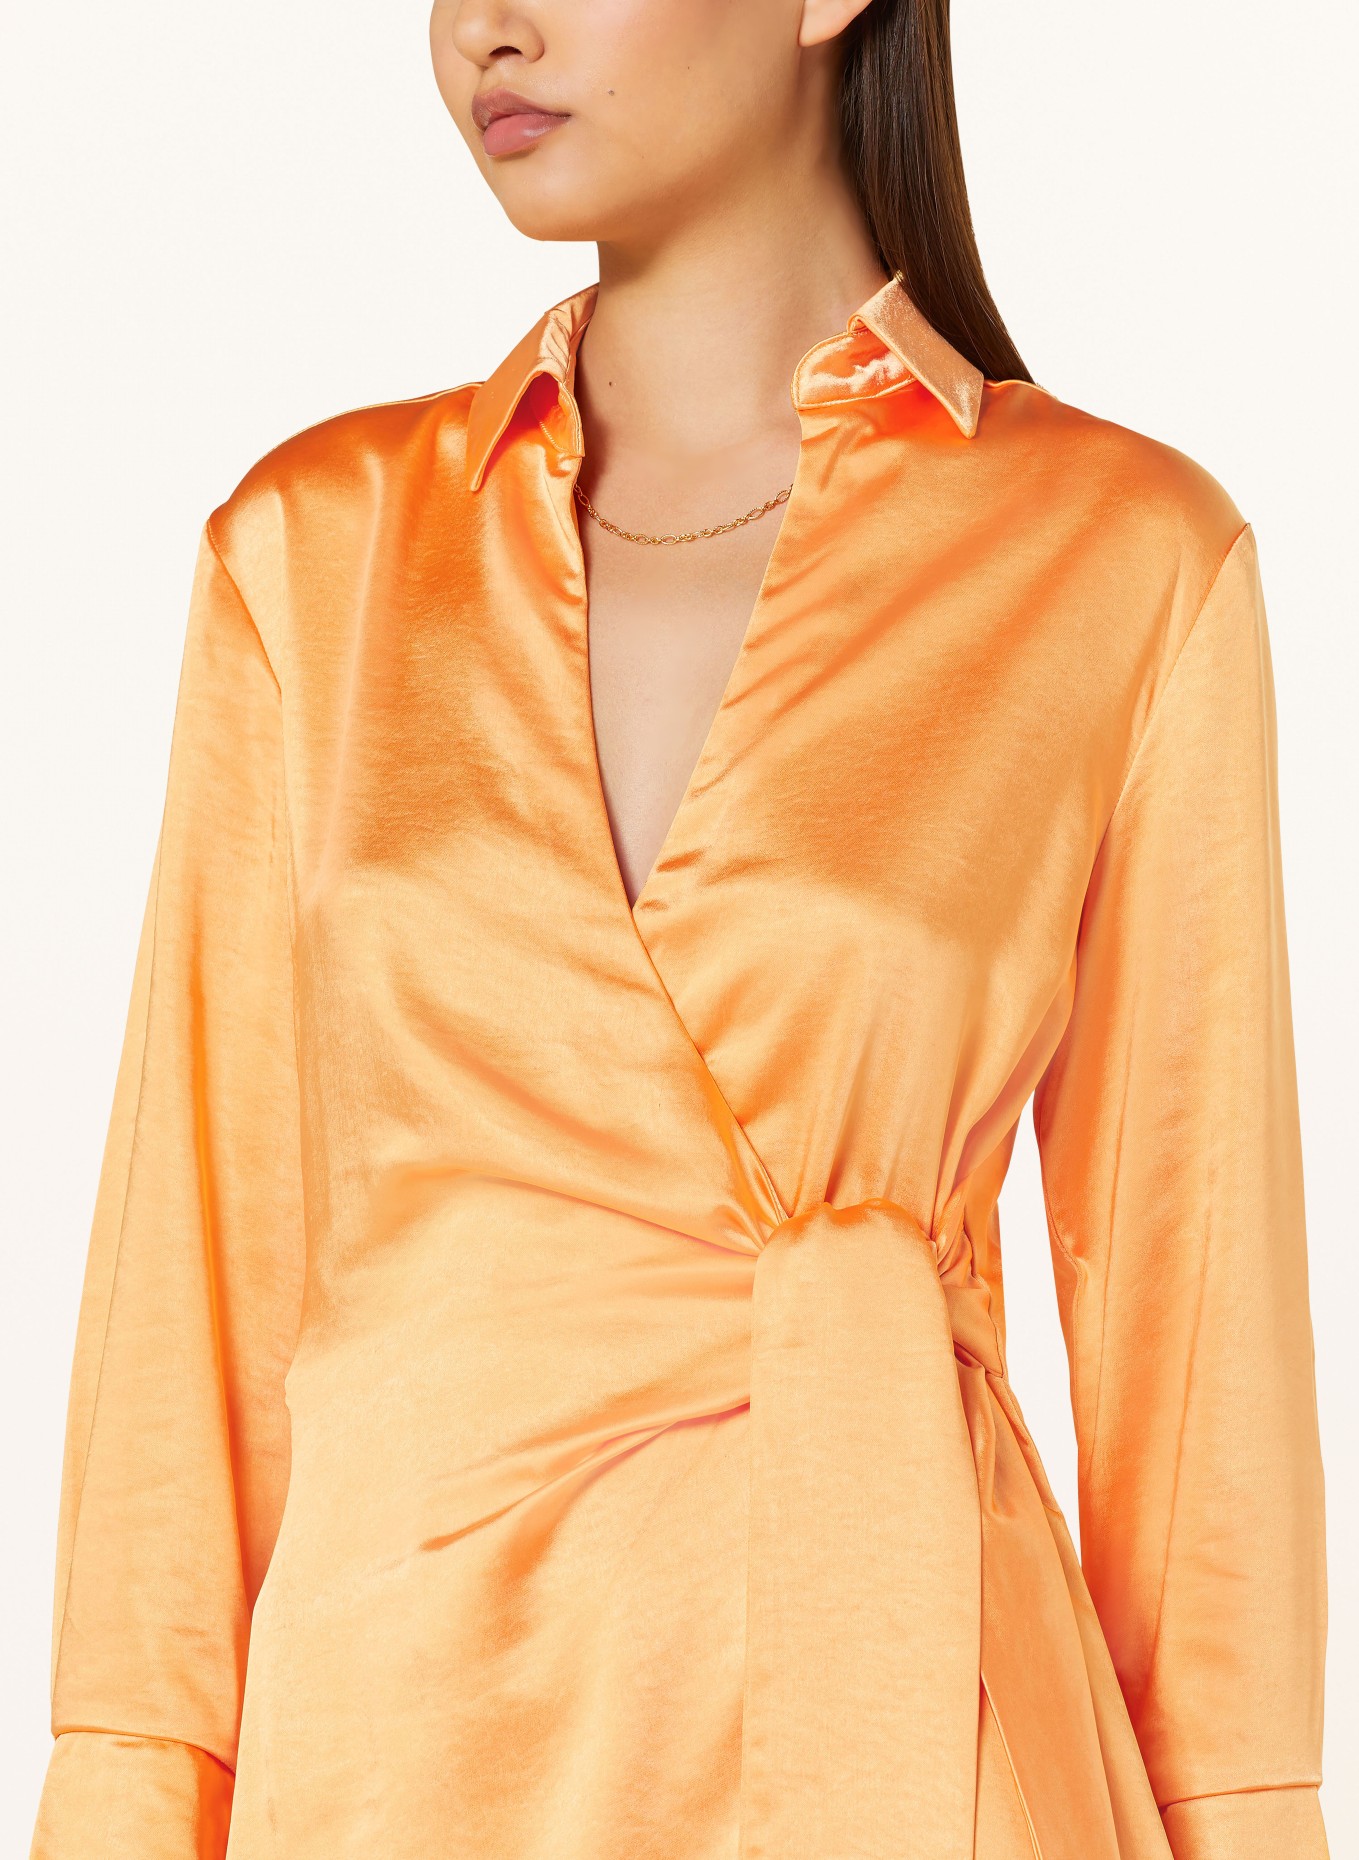 COLOURFUL REBEL Wrap dress METTE made of satin, Color: ORANGE (Image 4)